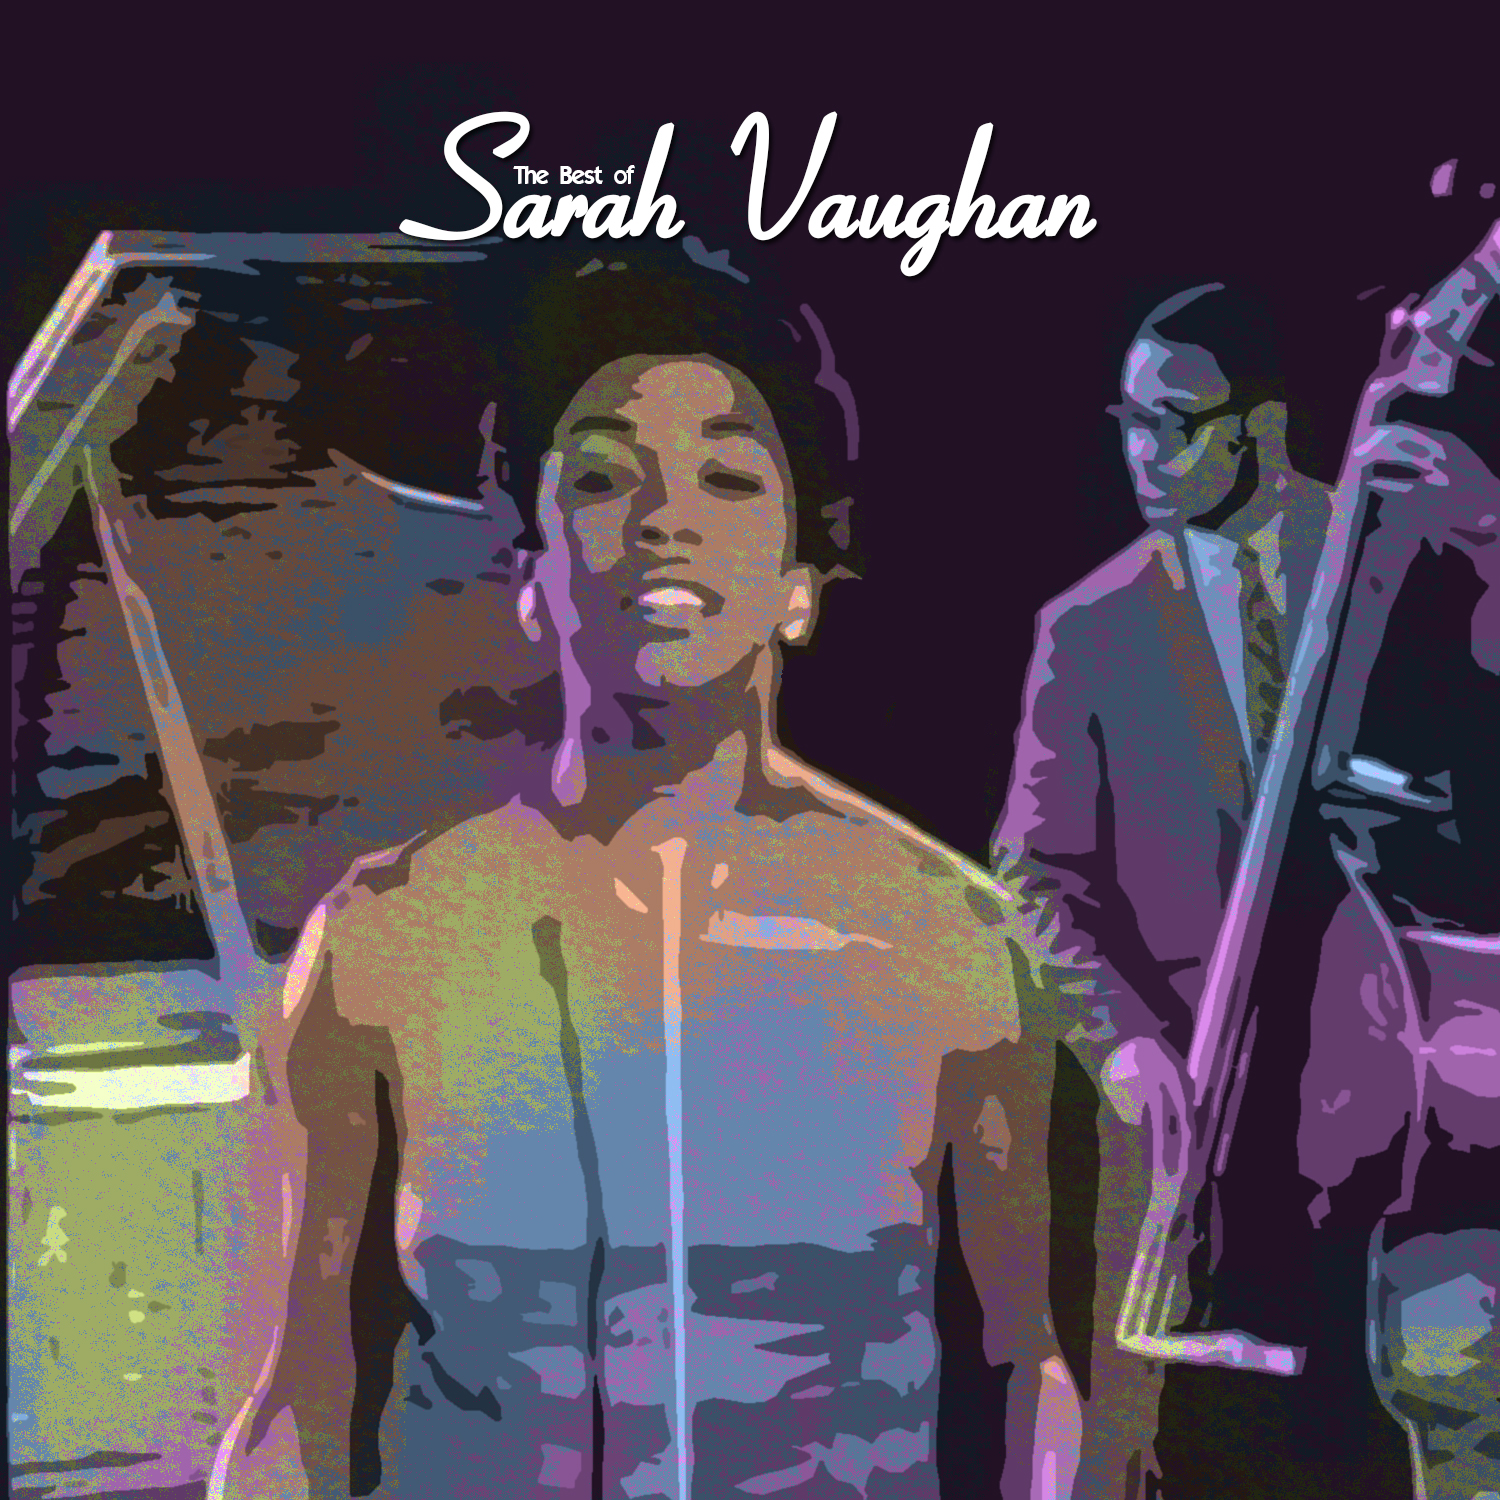 The Best of Sarah Vaughan by Sarah Vaughan